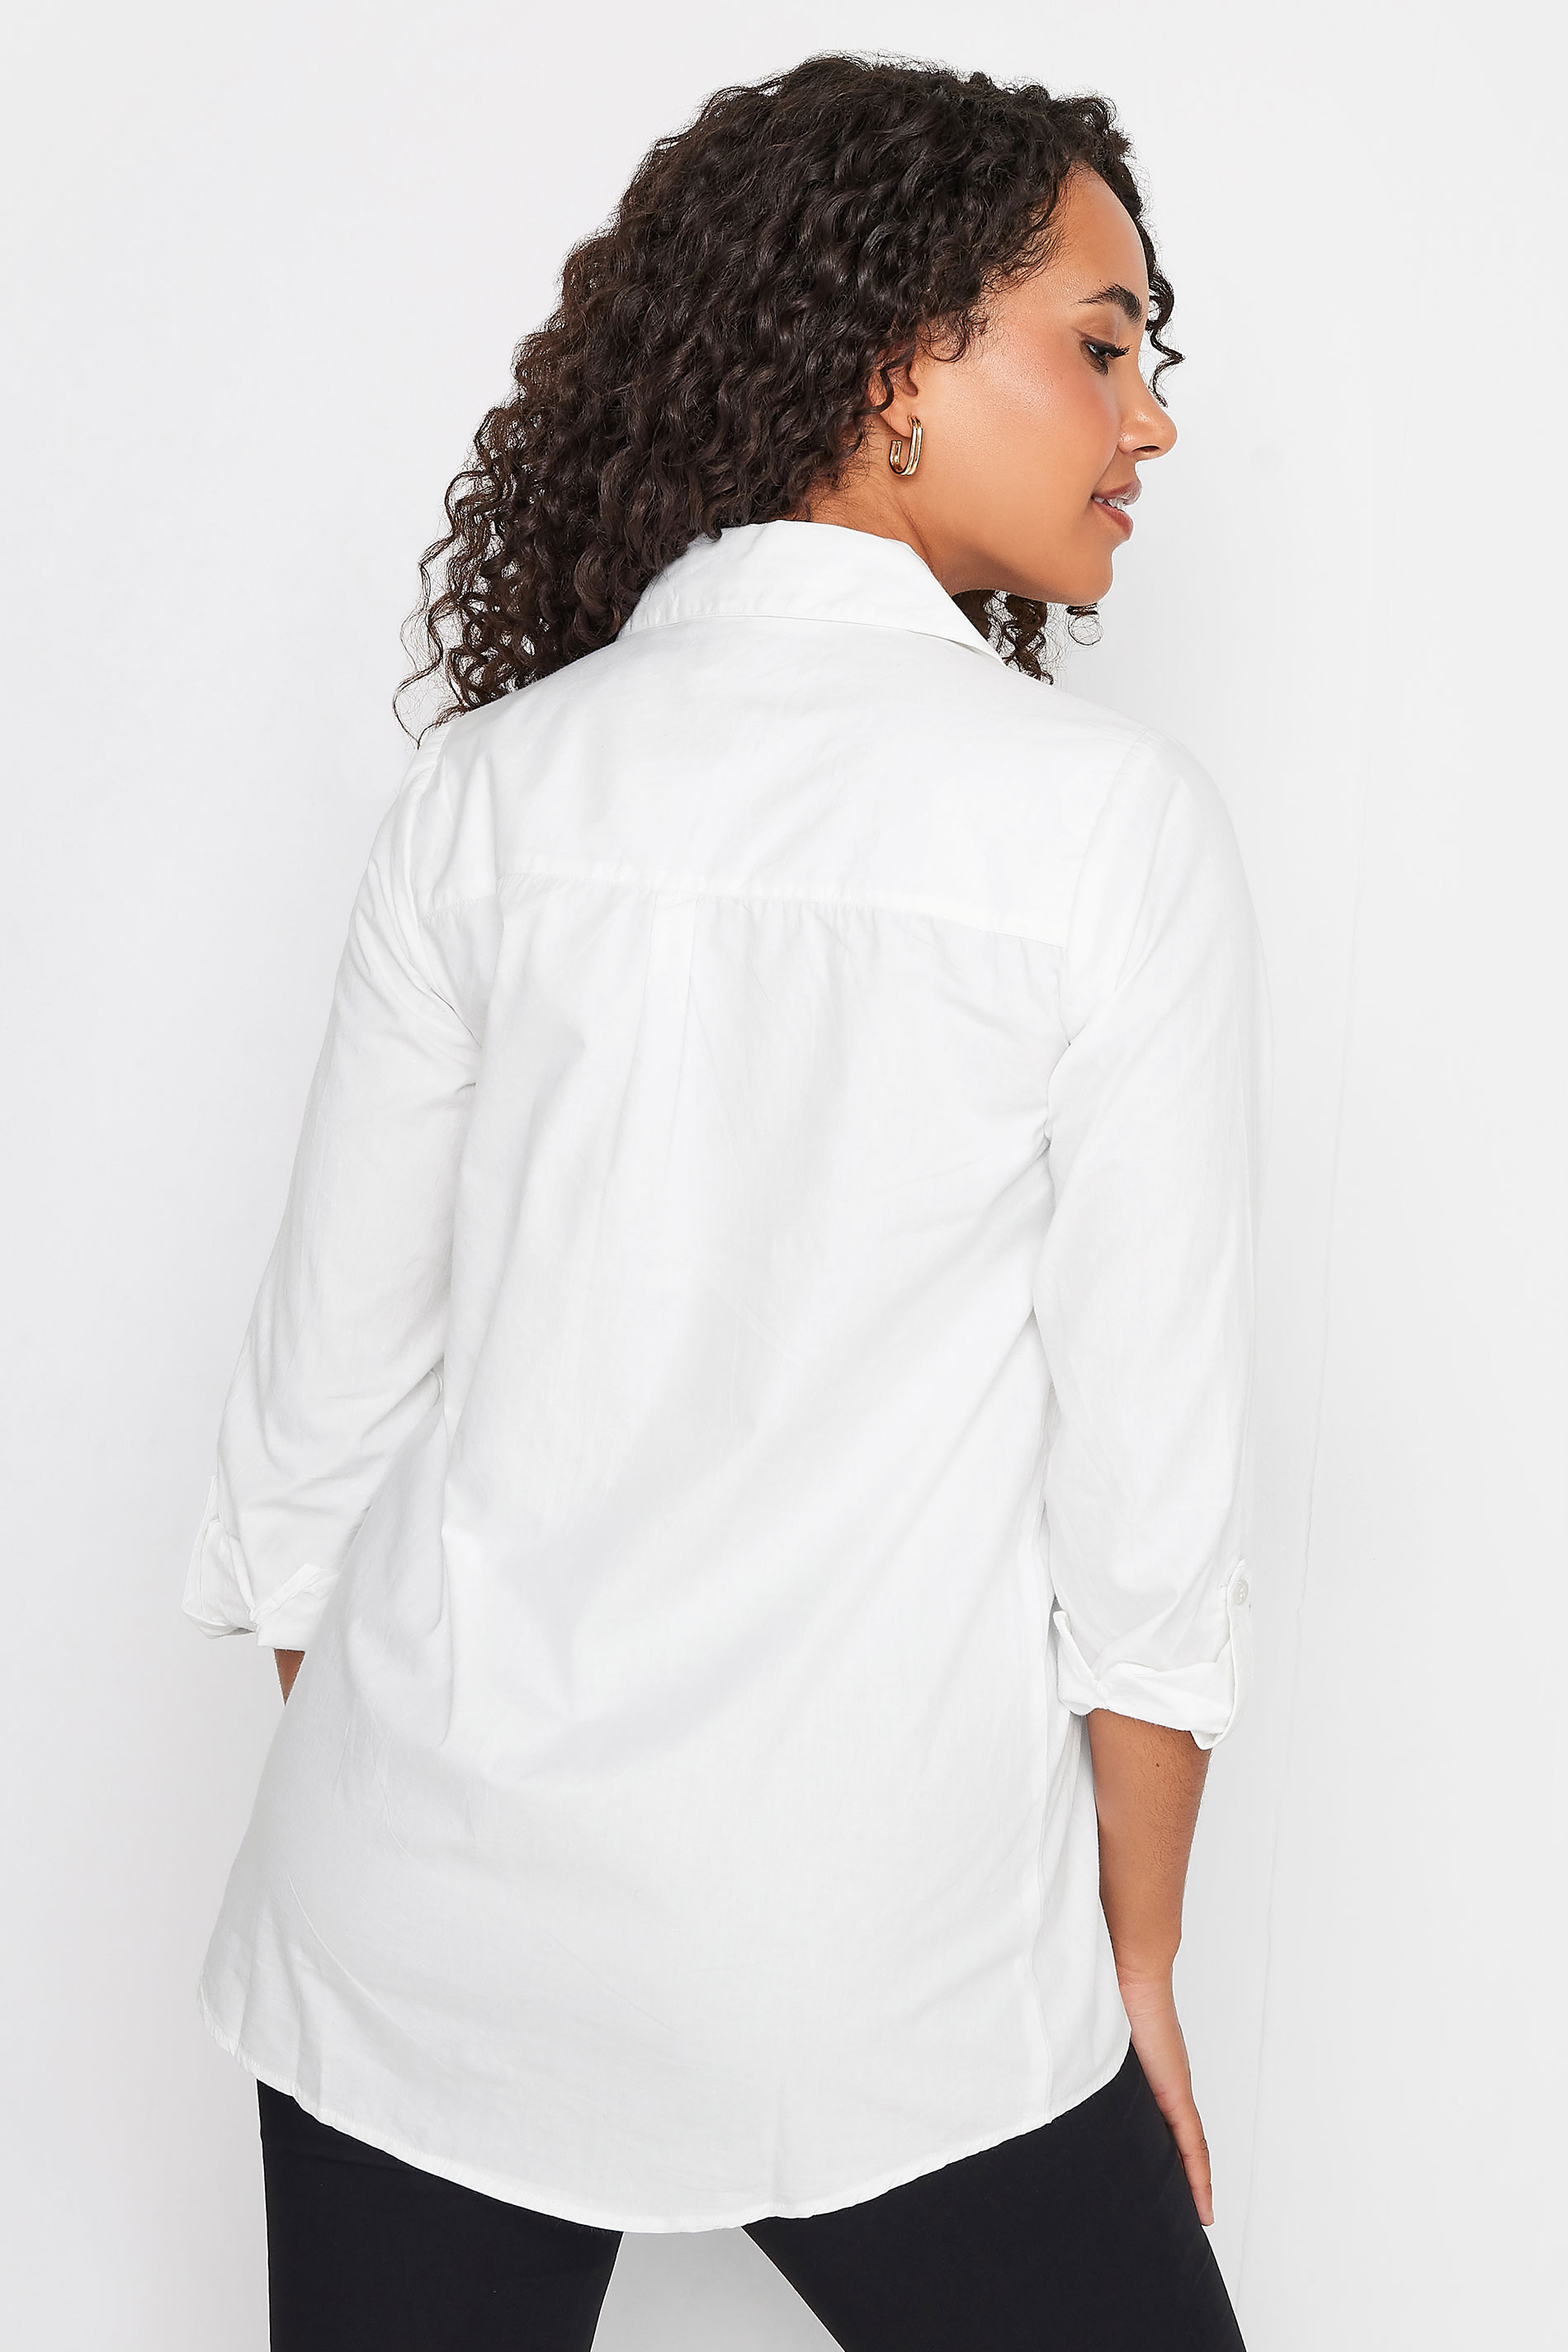 M&Co White Oversized Cotton Poplin Shirt | M&Co 3